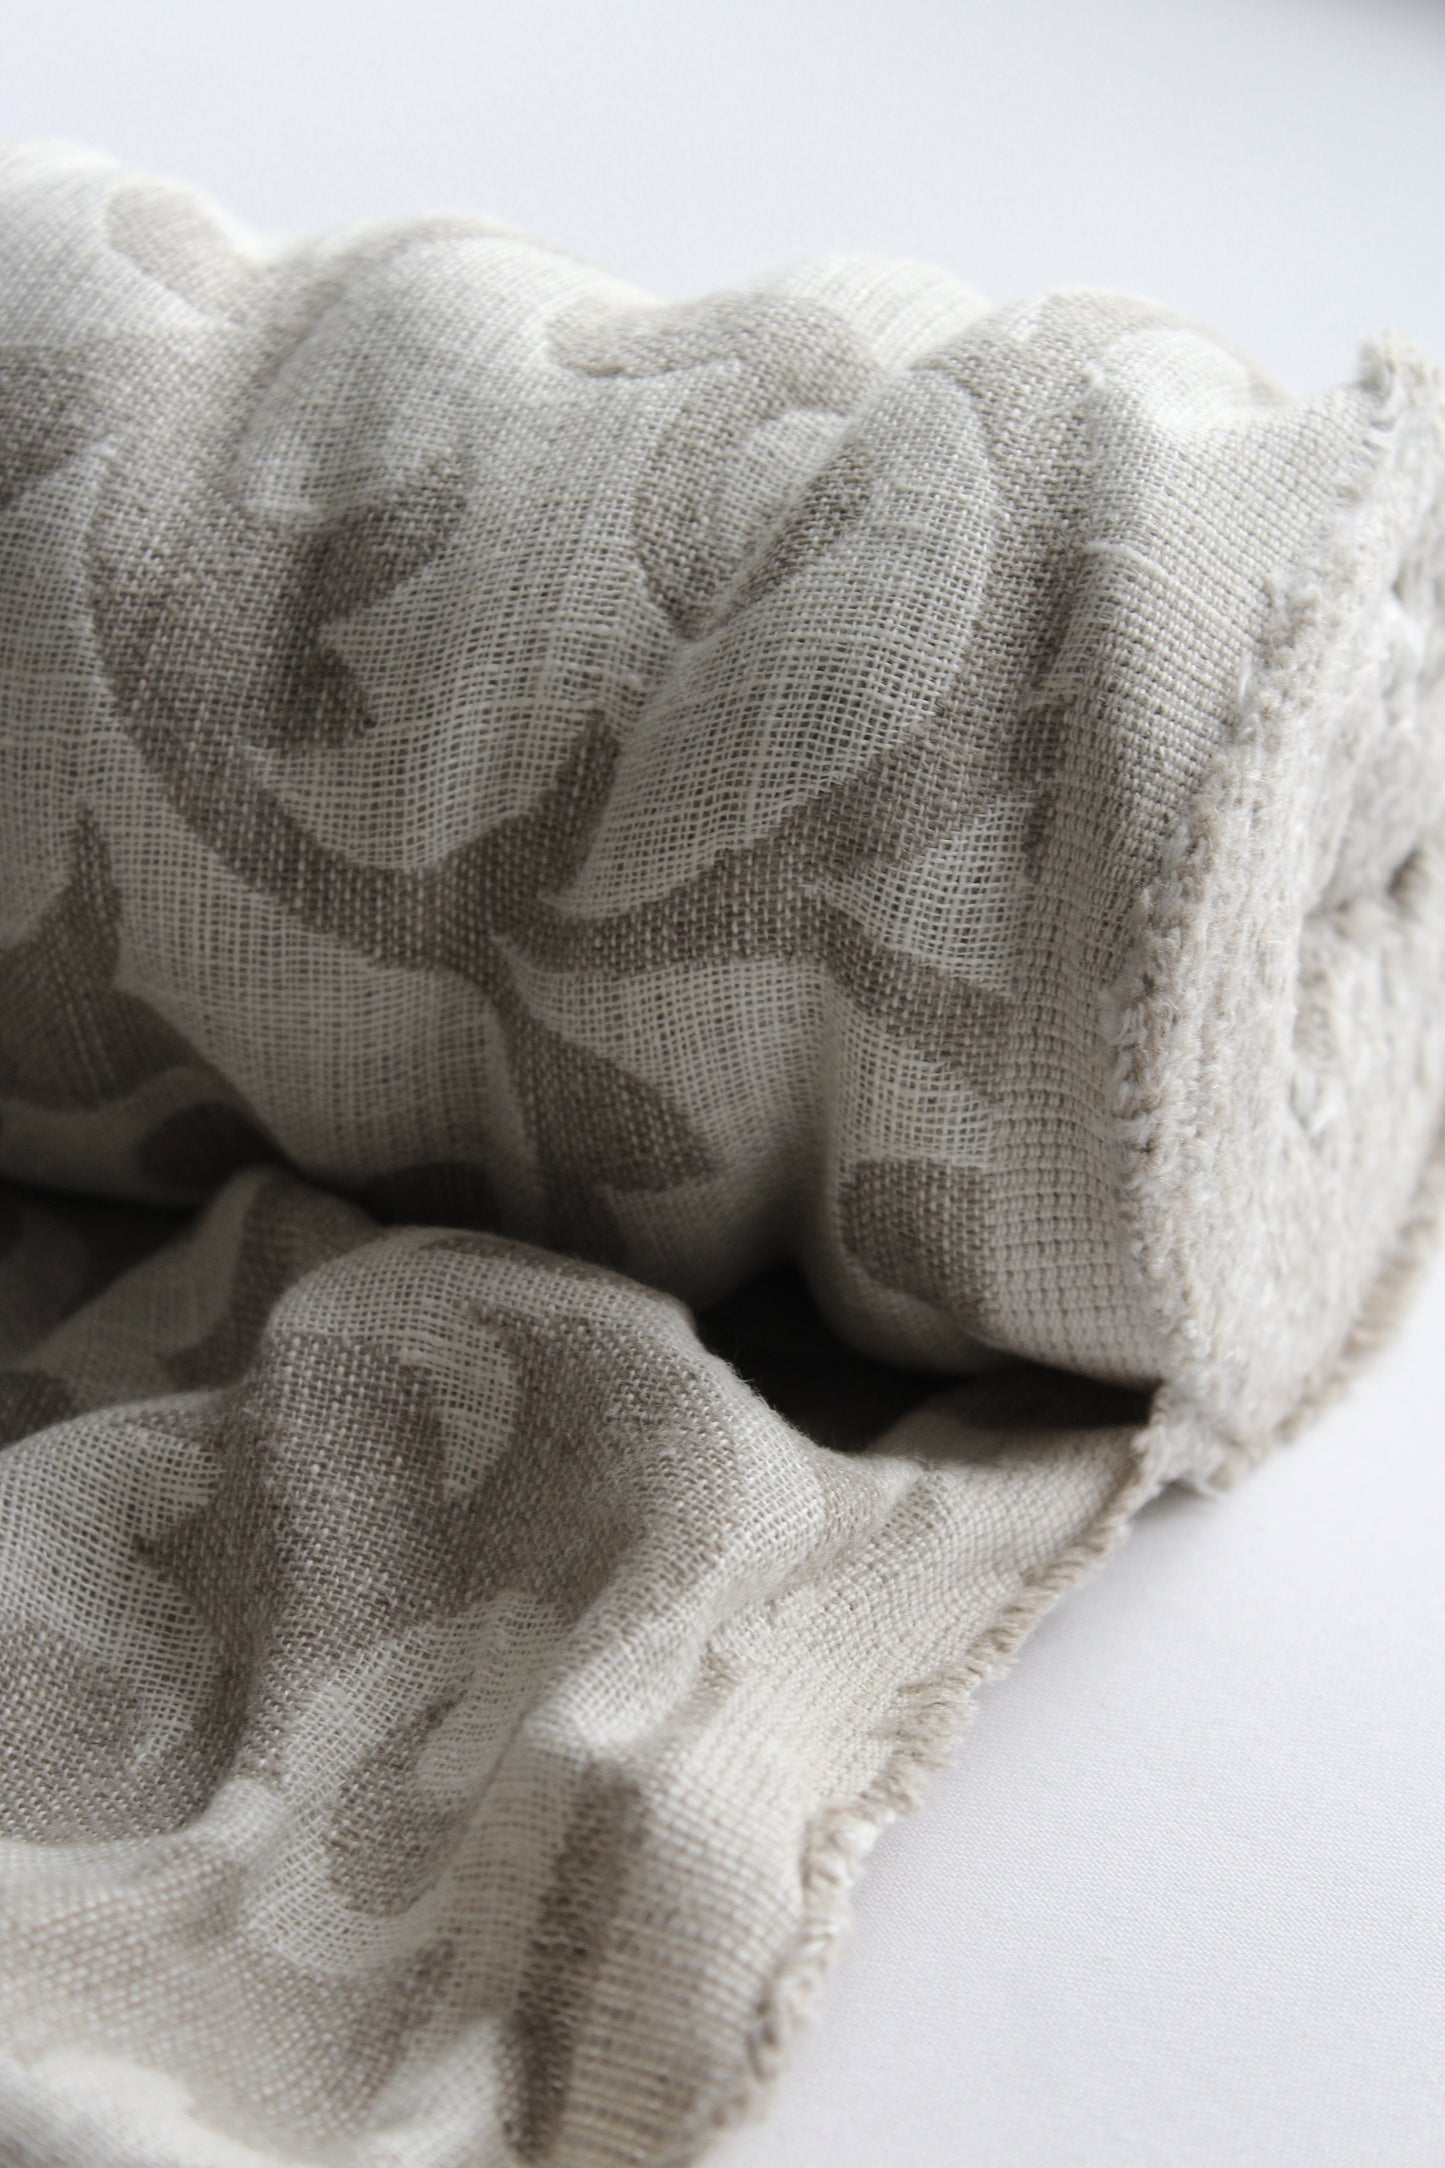 Double Woven Jacquard Linen Fabric